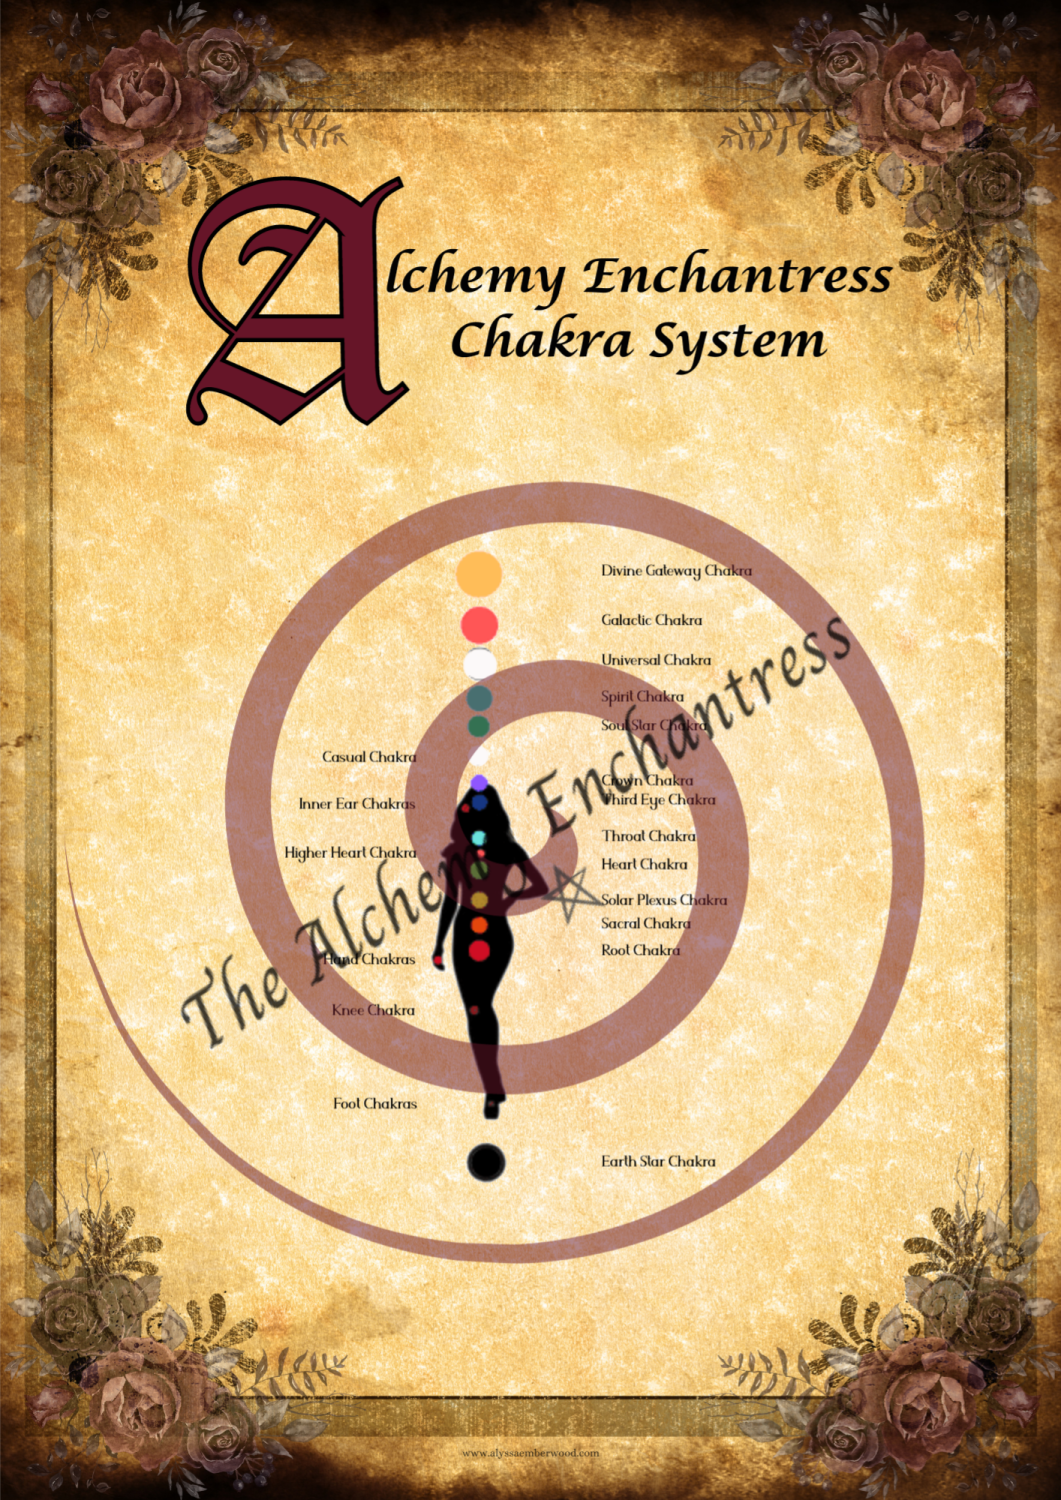 Alchemy Enchantress 12 Chakra System Diagram